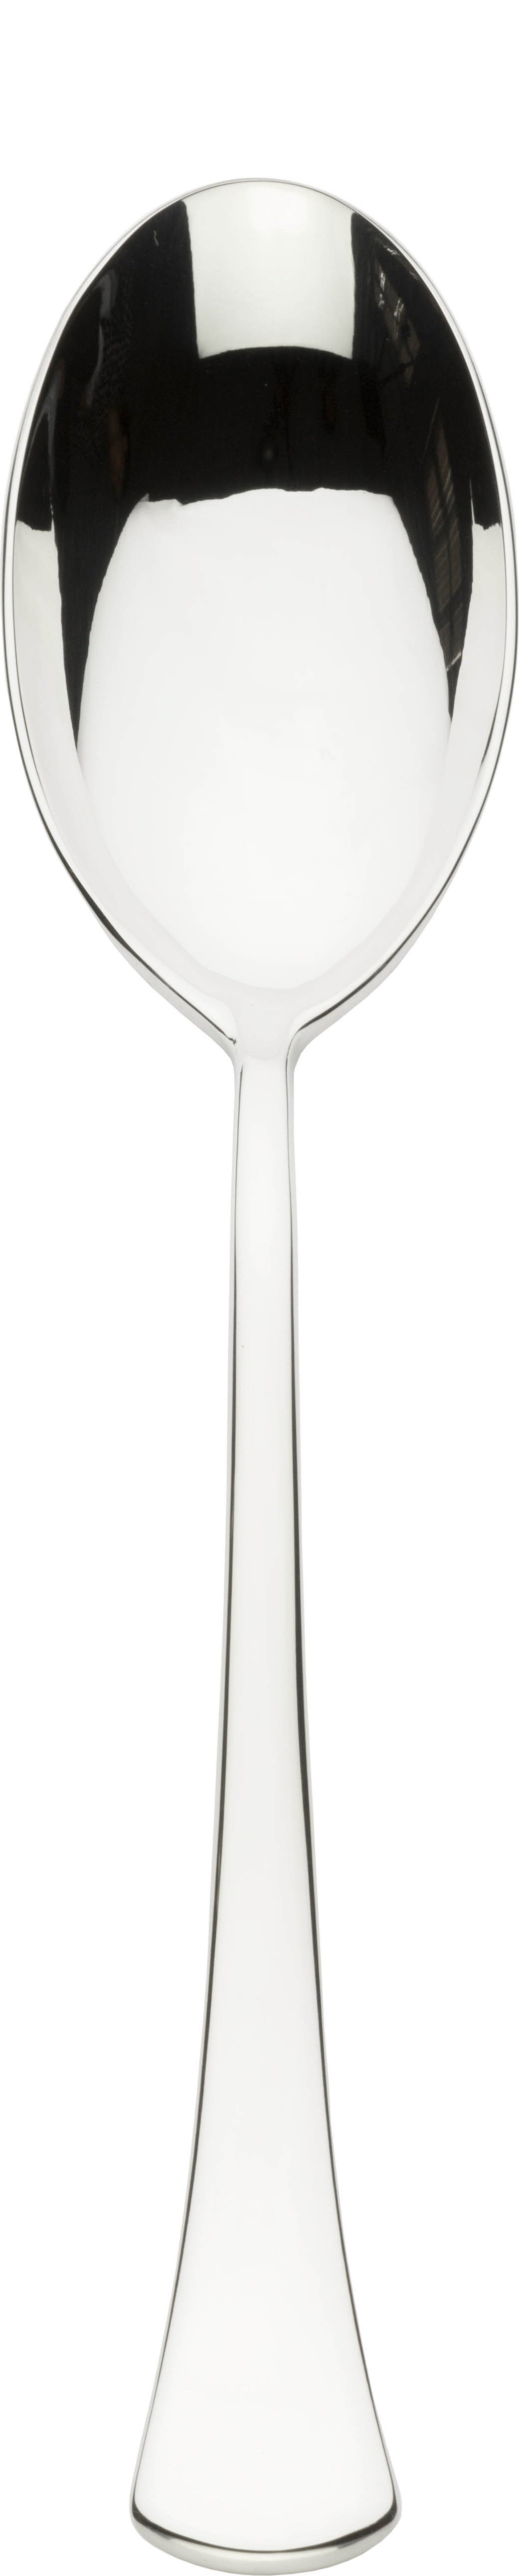 Aquila Table Spoon